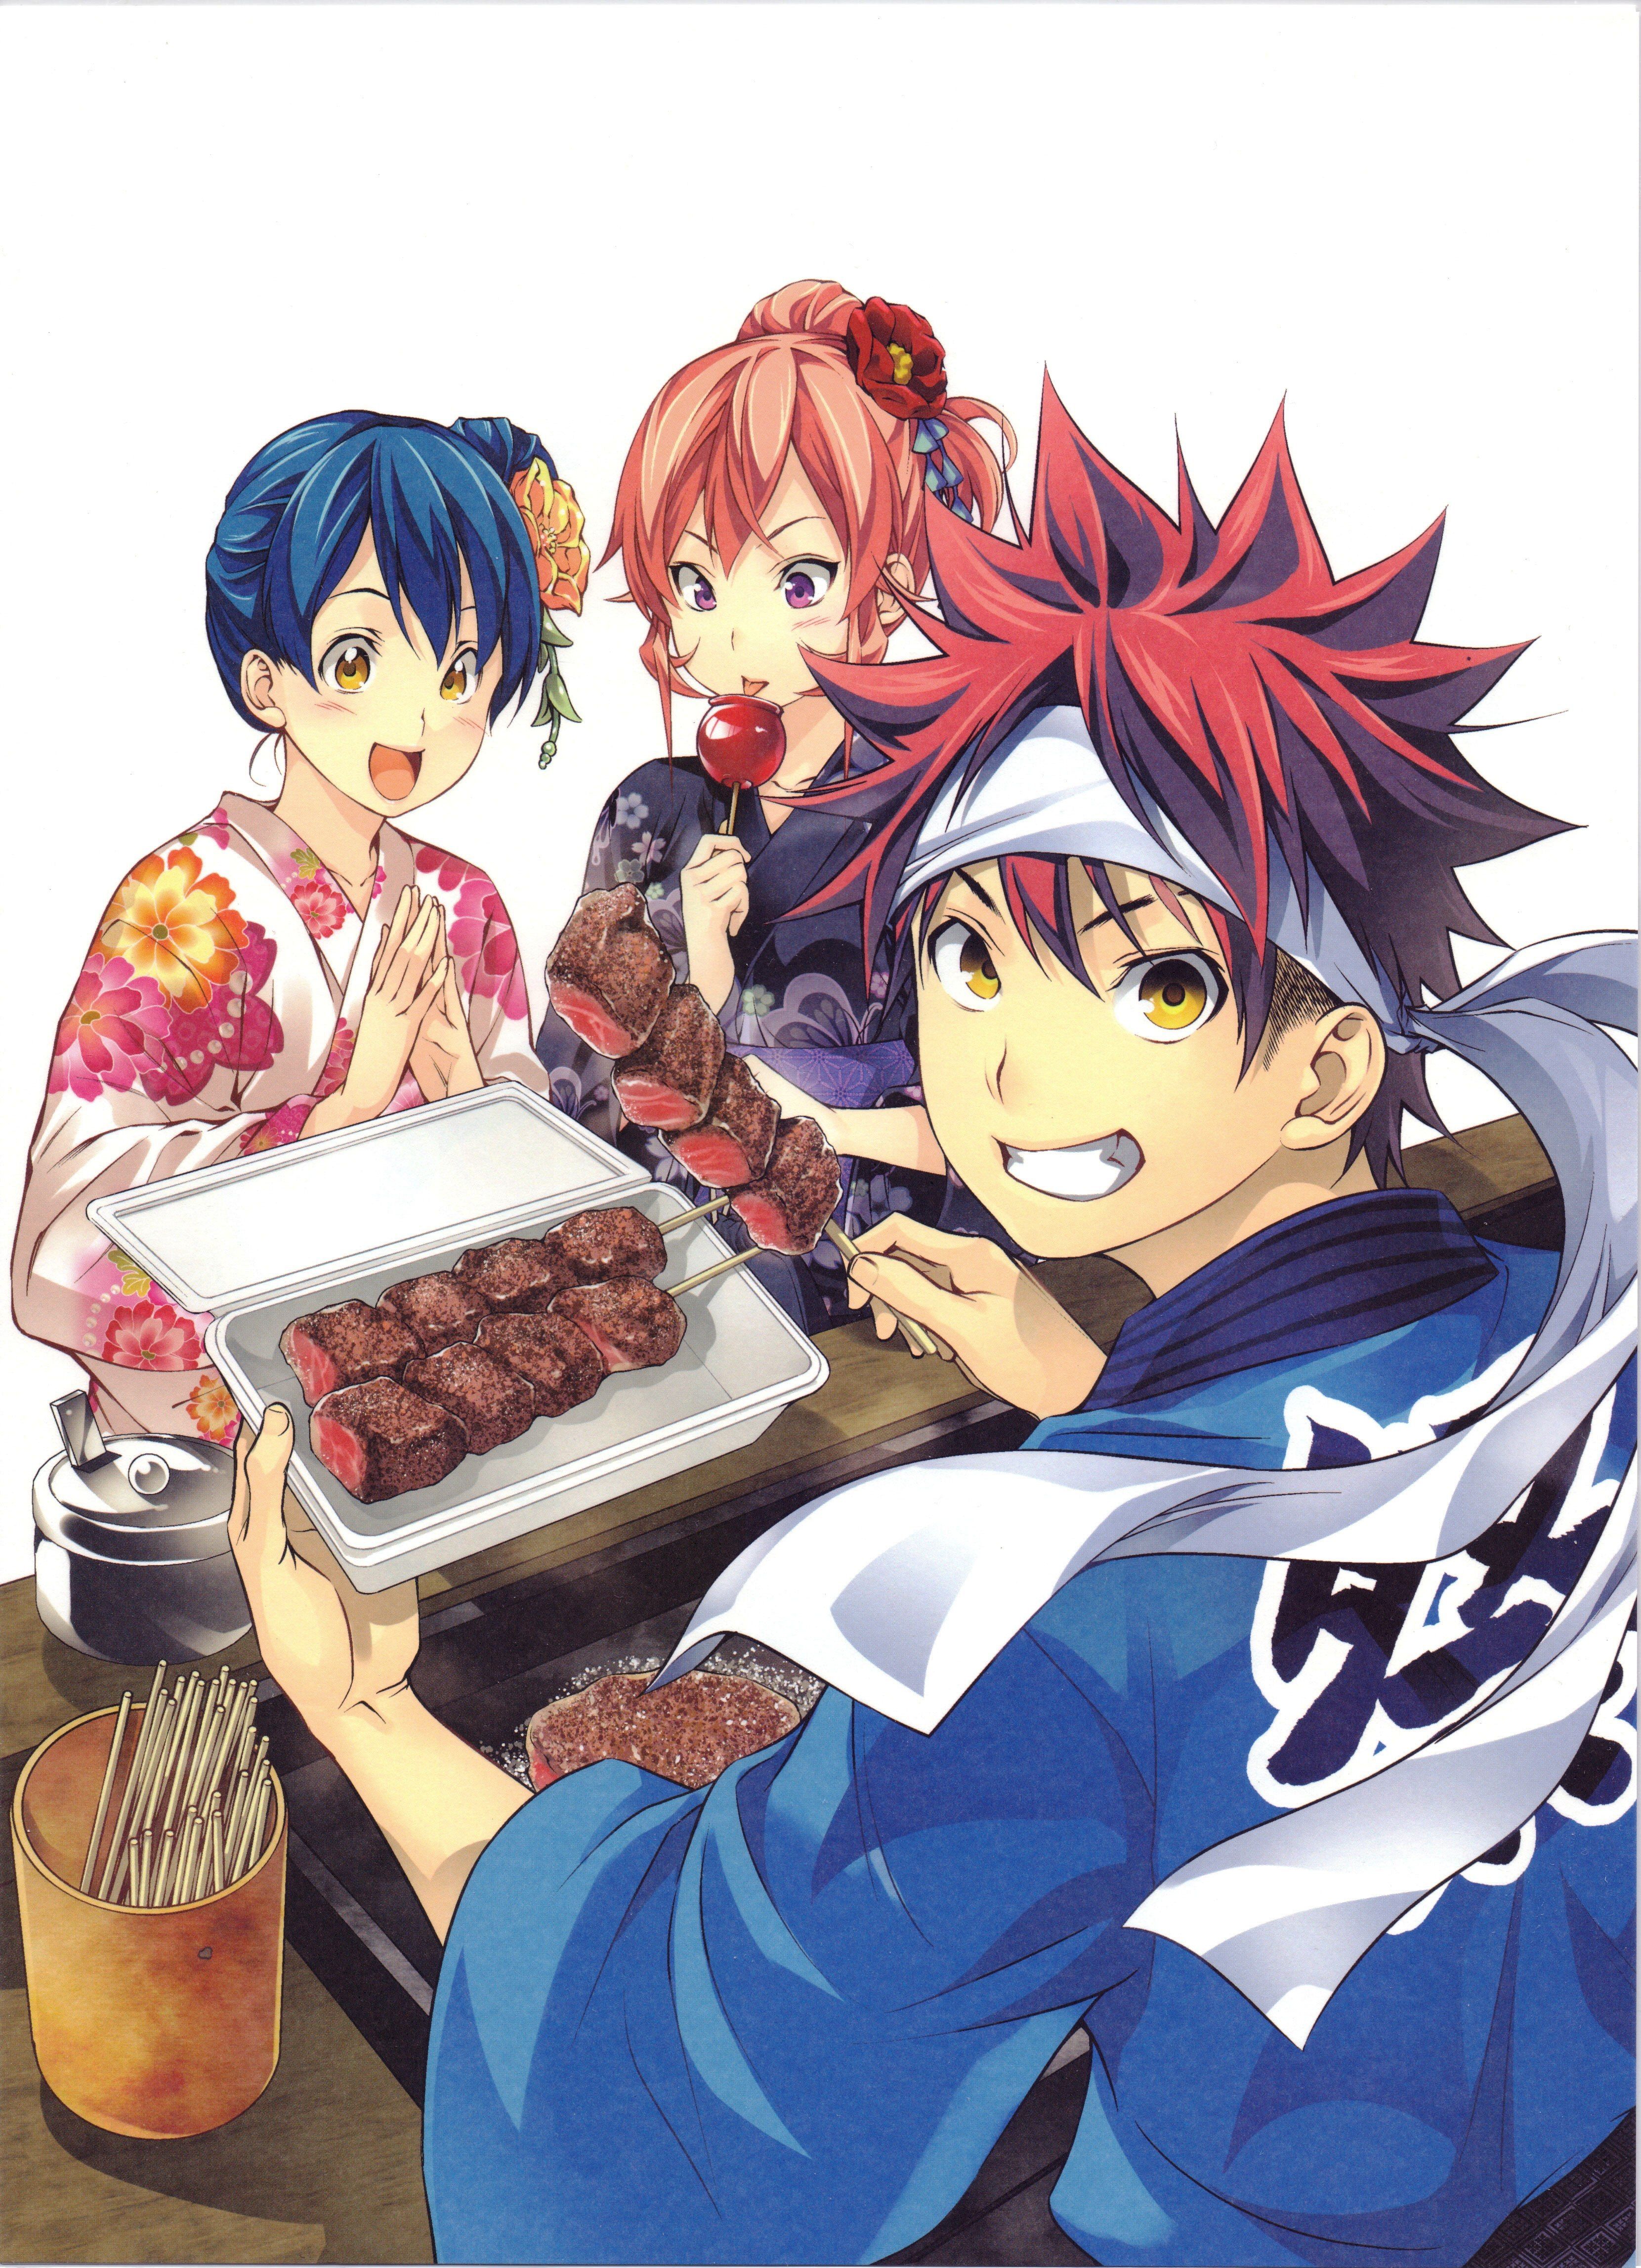 Shokugeki no Souma (Food Wars!), Mobile Wallpaper Anime Image Board